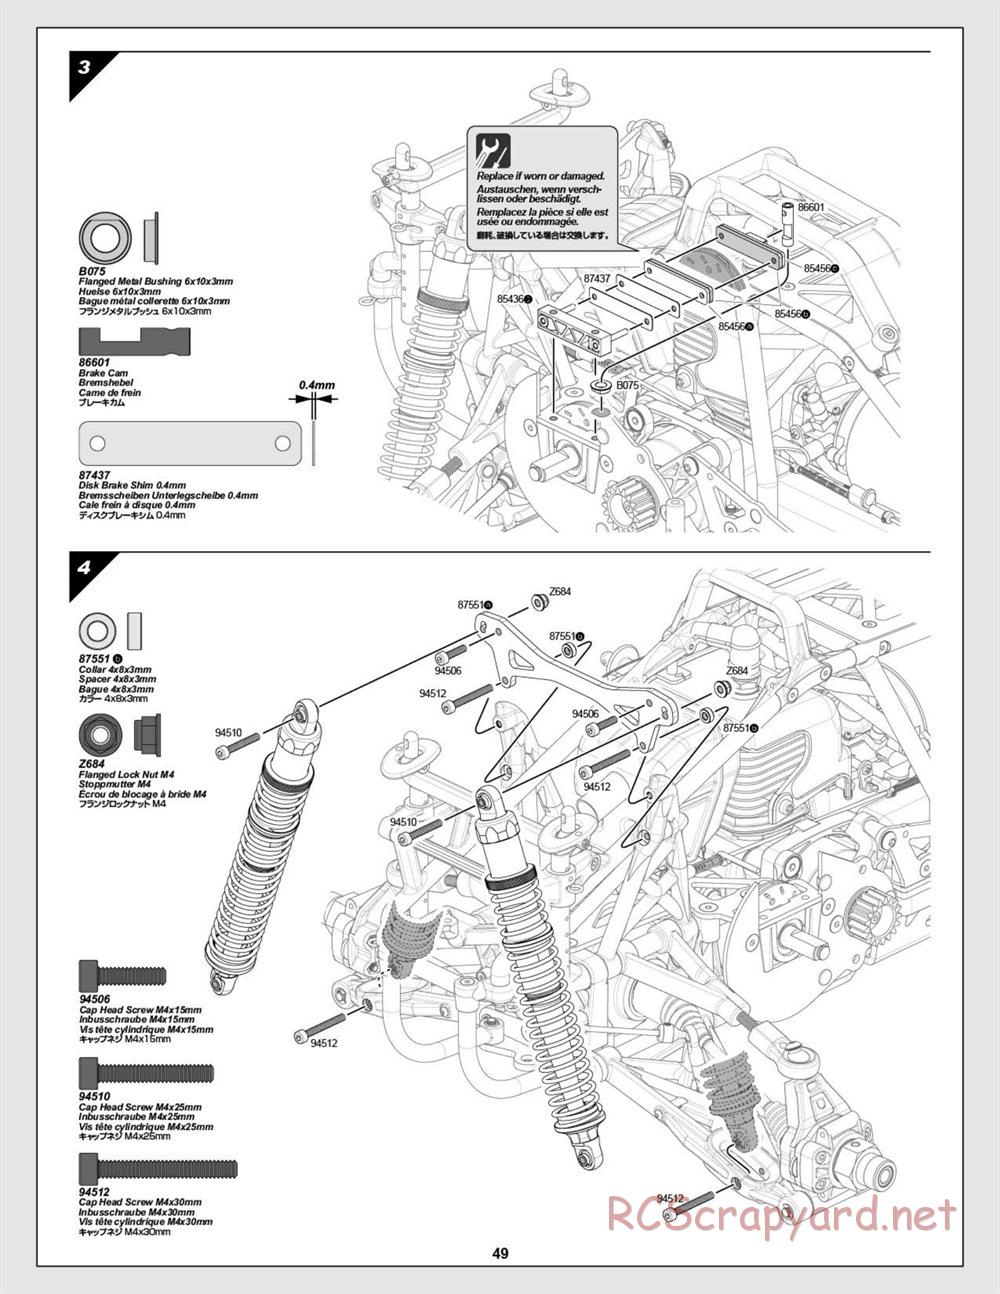 HPI - Baja 5T - Manual - Page 49